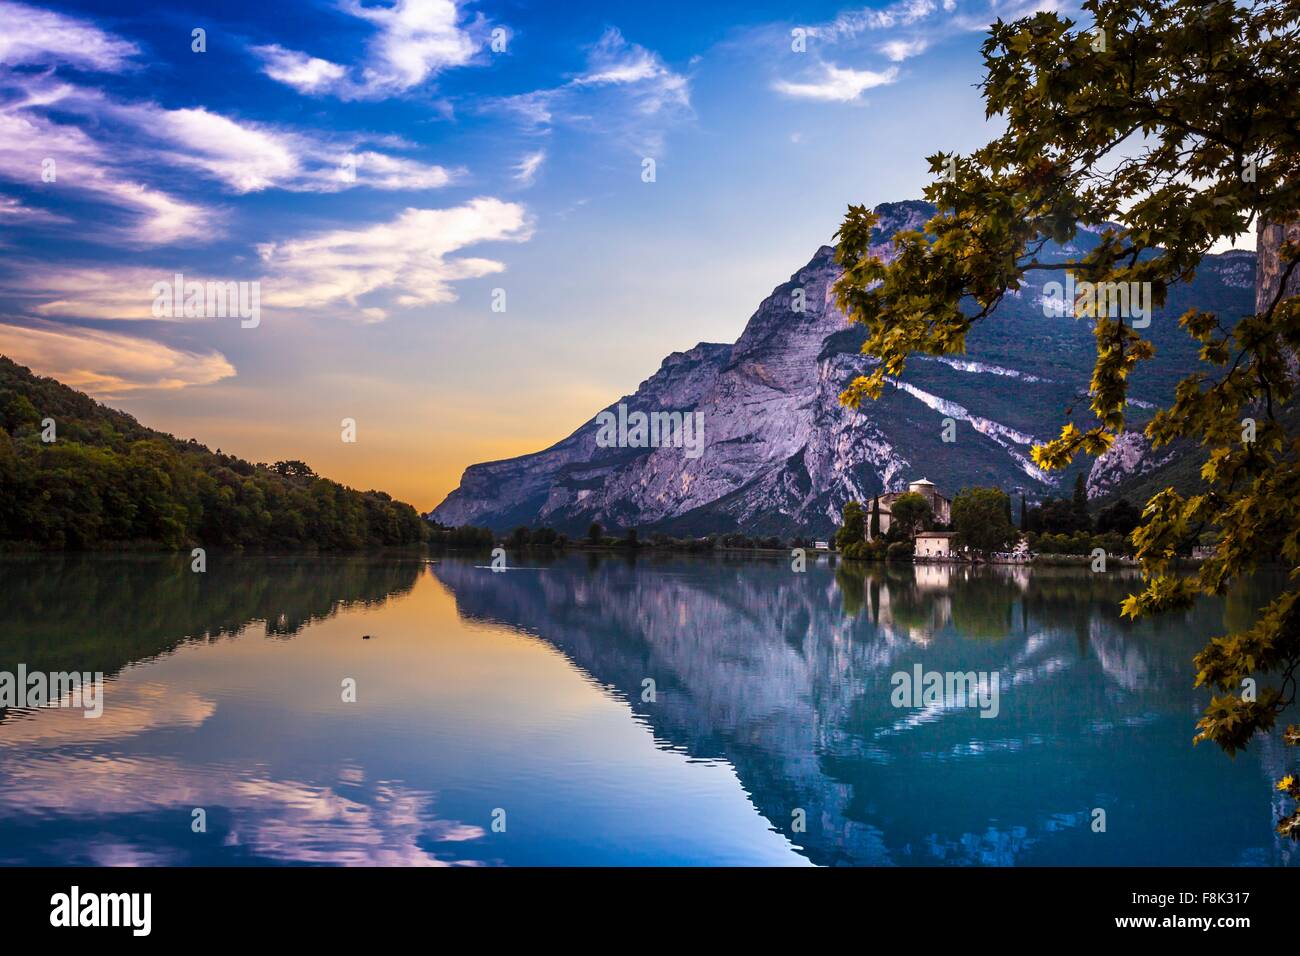 View of lake and mountains, Trentino Alto Adige, Italy Stock Photo